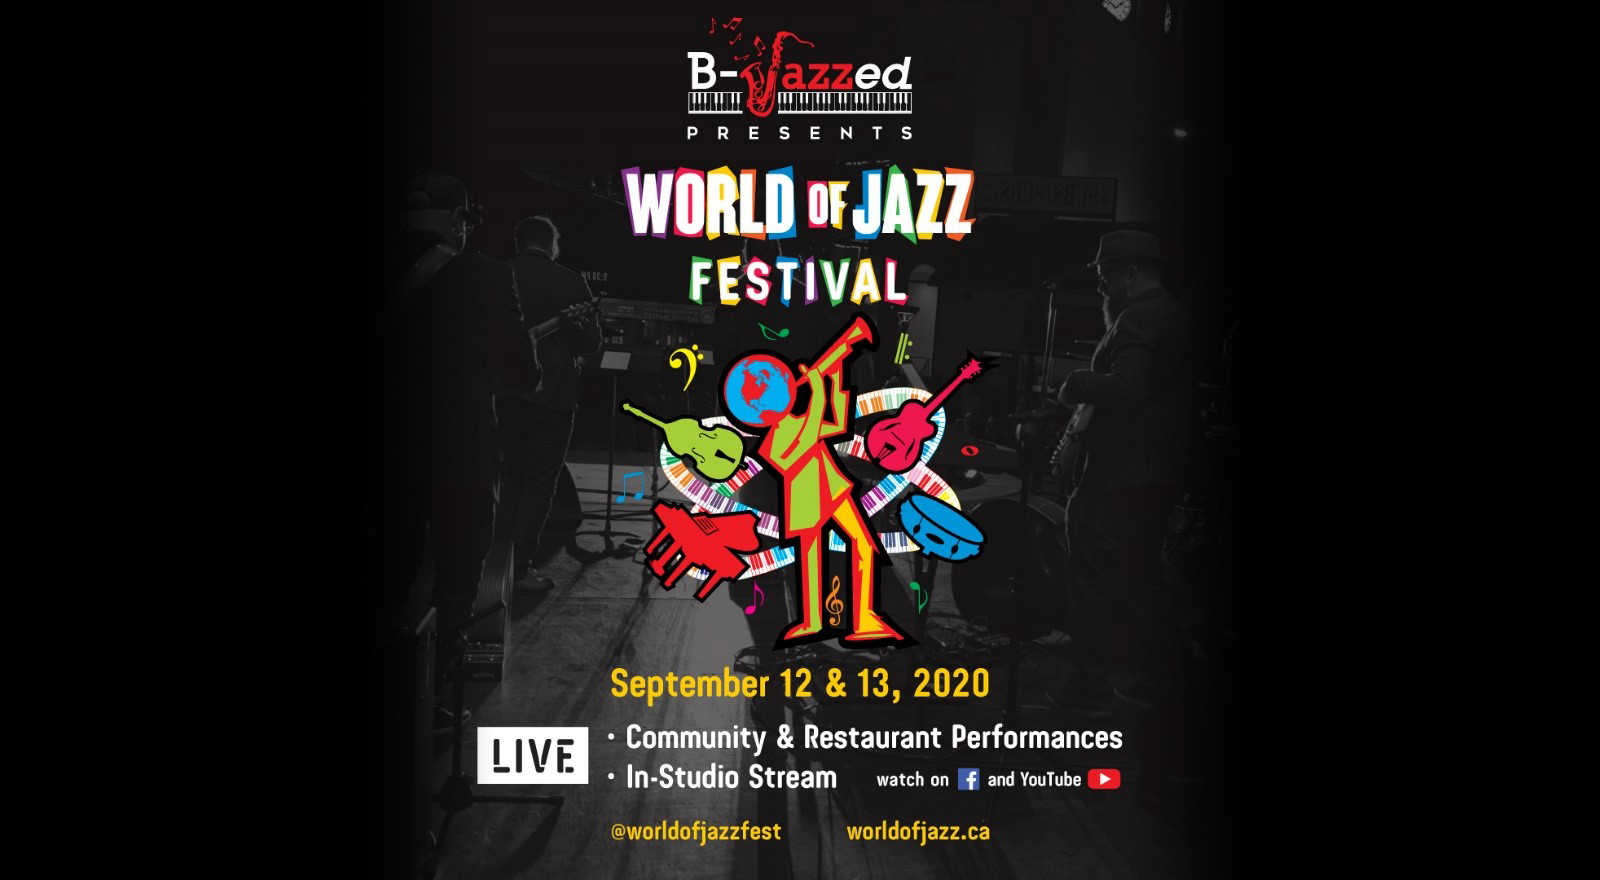 World of Jazz Festival, presented by B-Jazzed